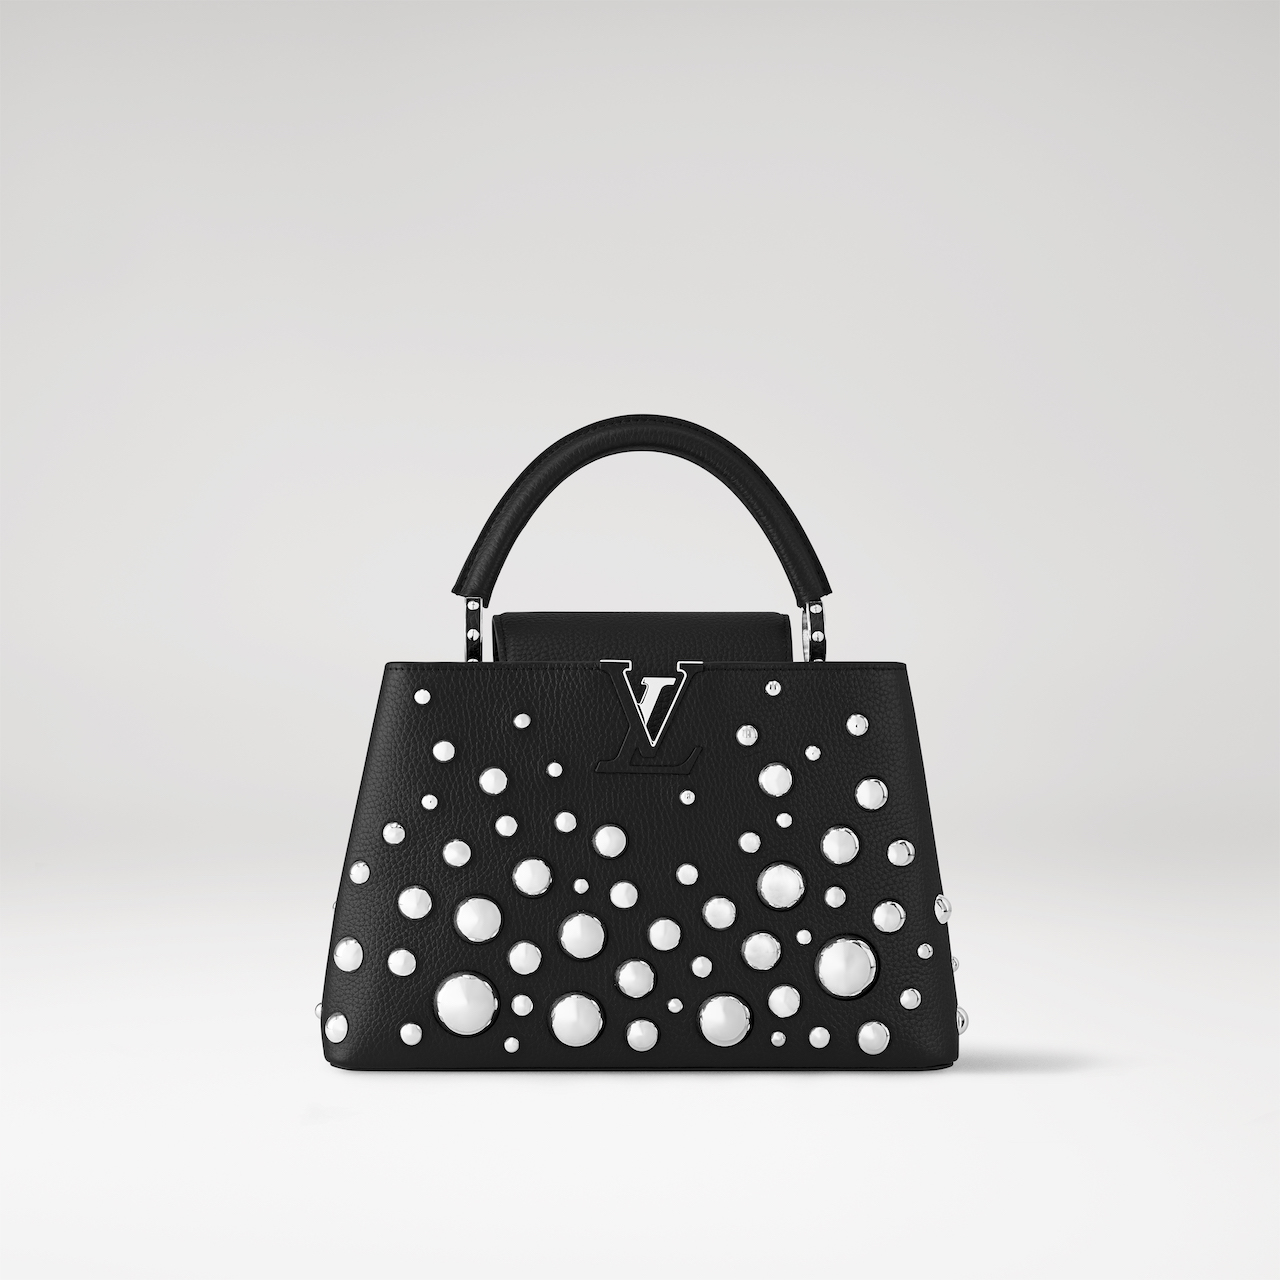 New Louis Vuitton x Yayoi Kusama Lacks Attention to the Zeitgeist –